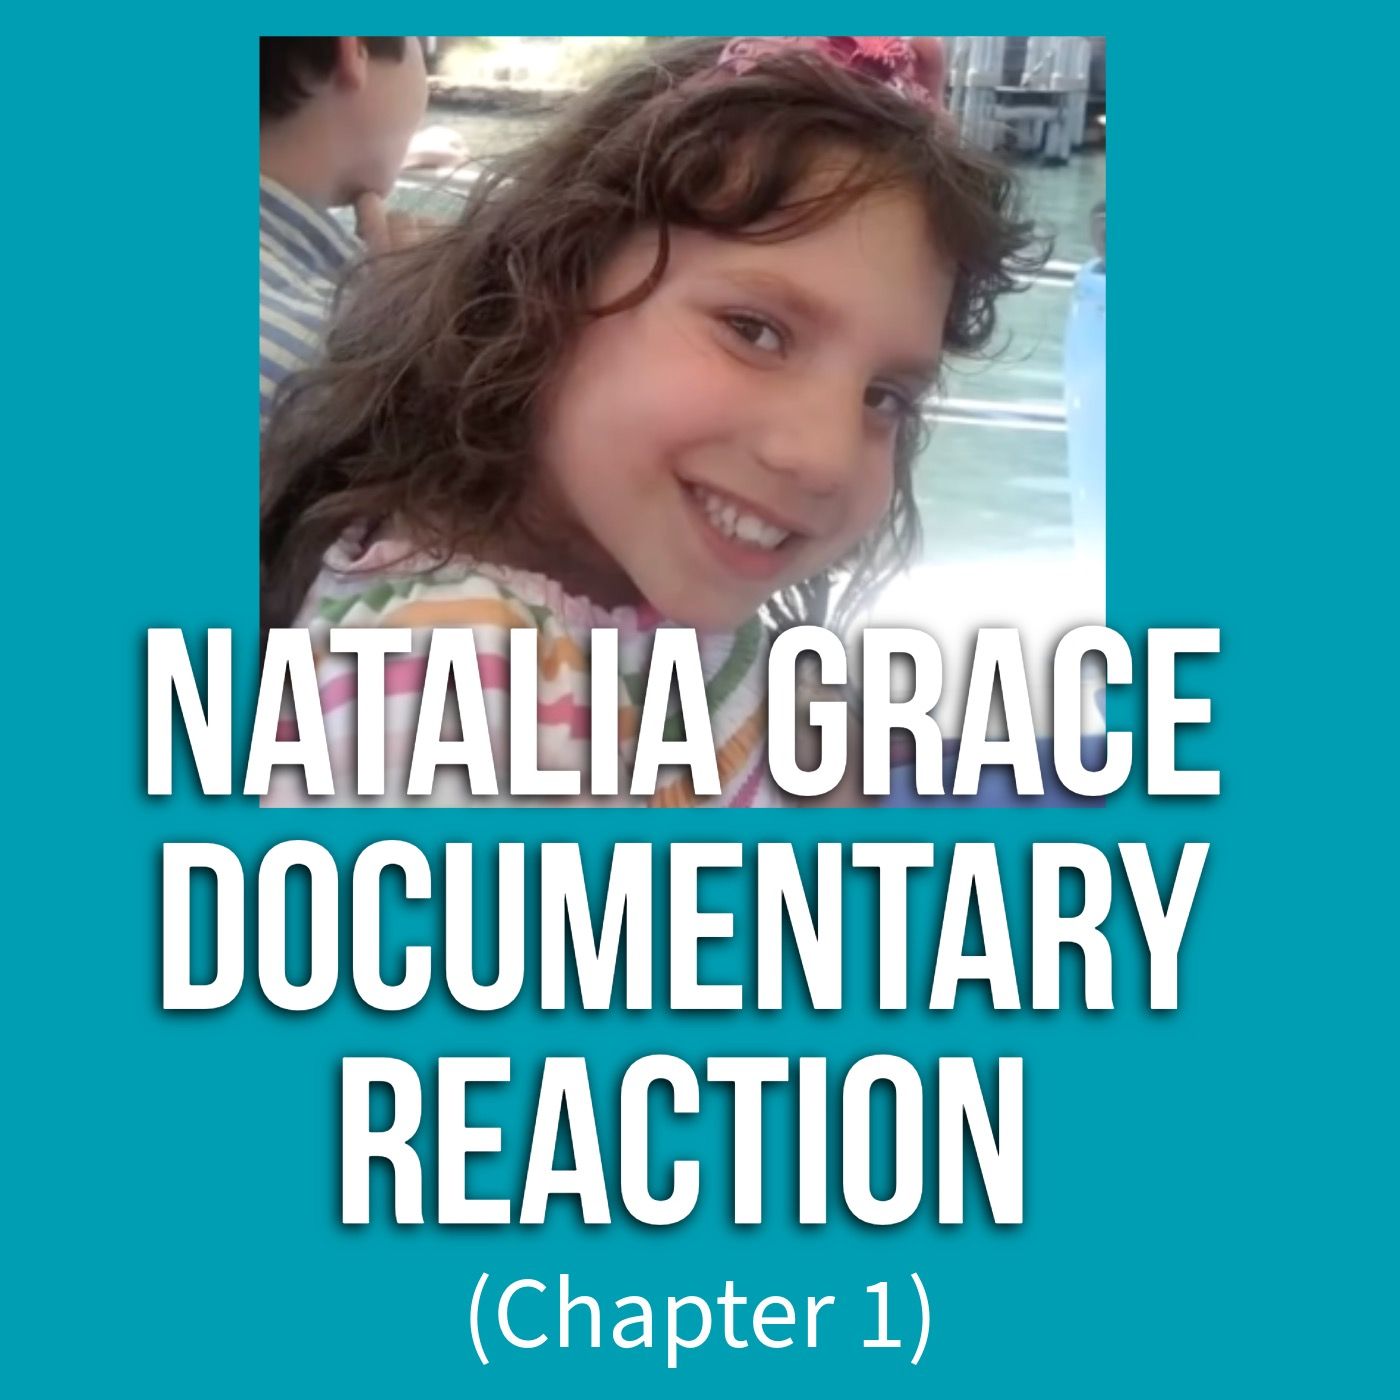 Natalia Grace Documentary Reaction (Chapter 1)